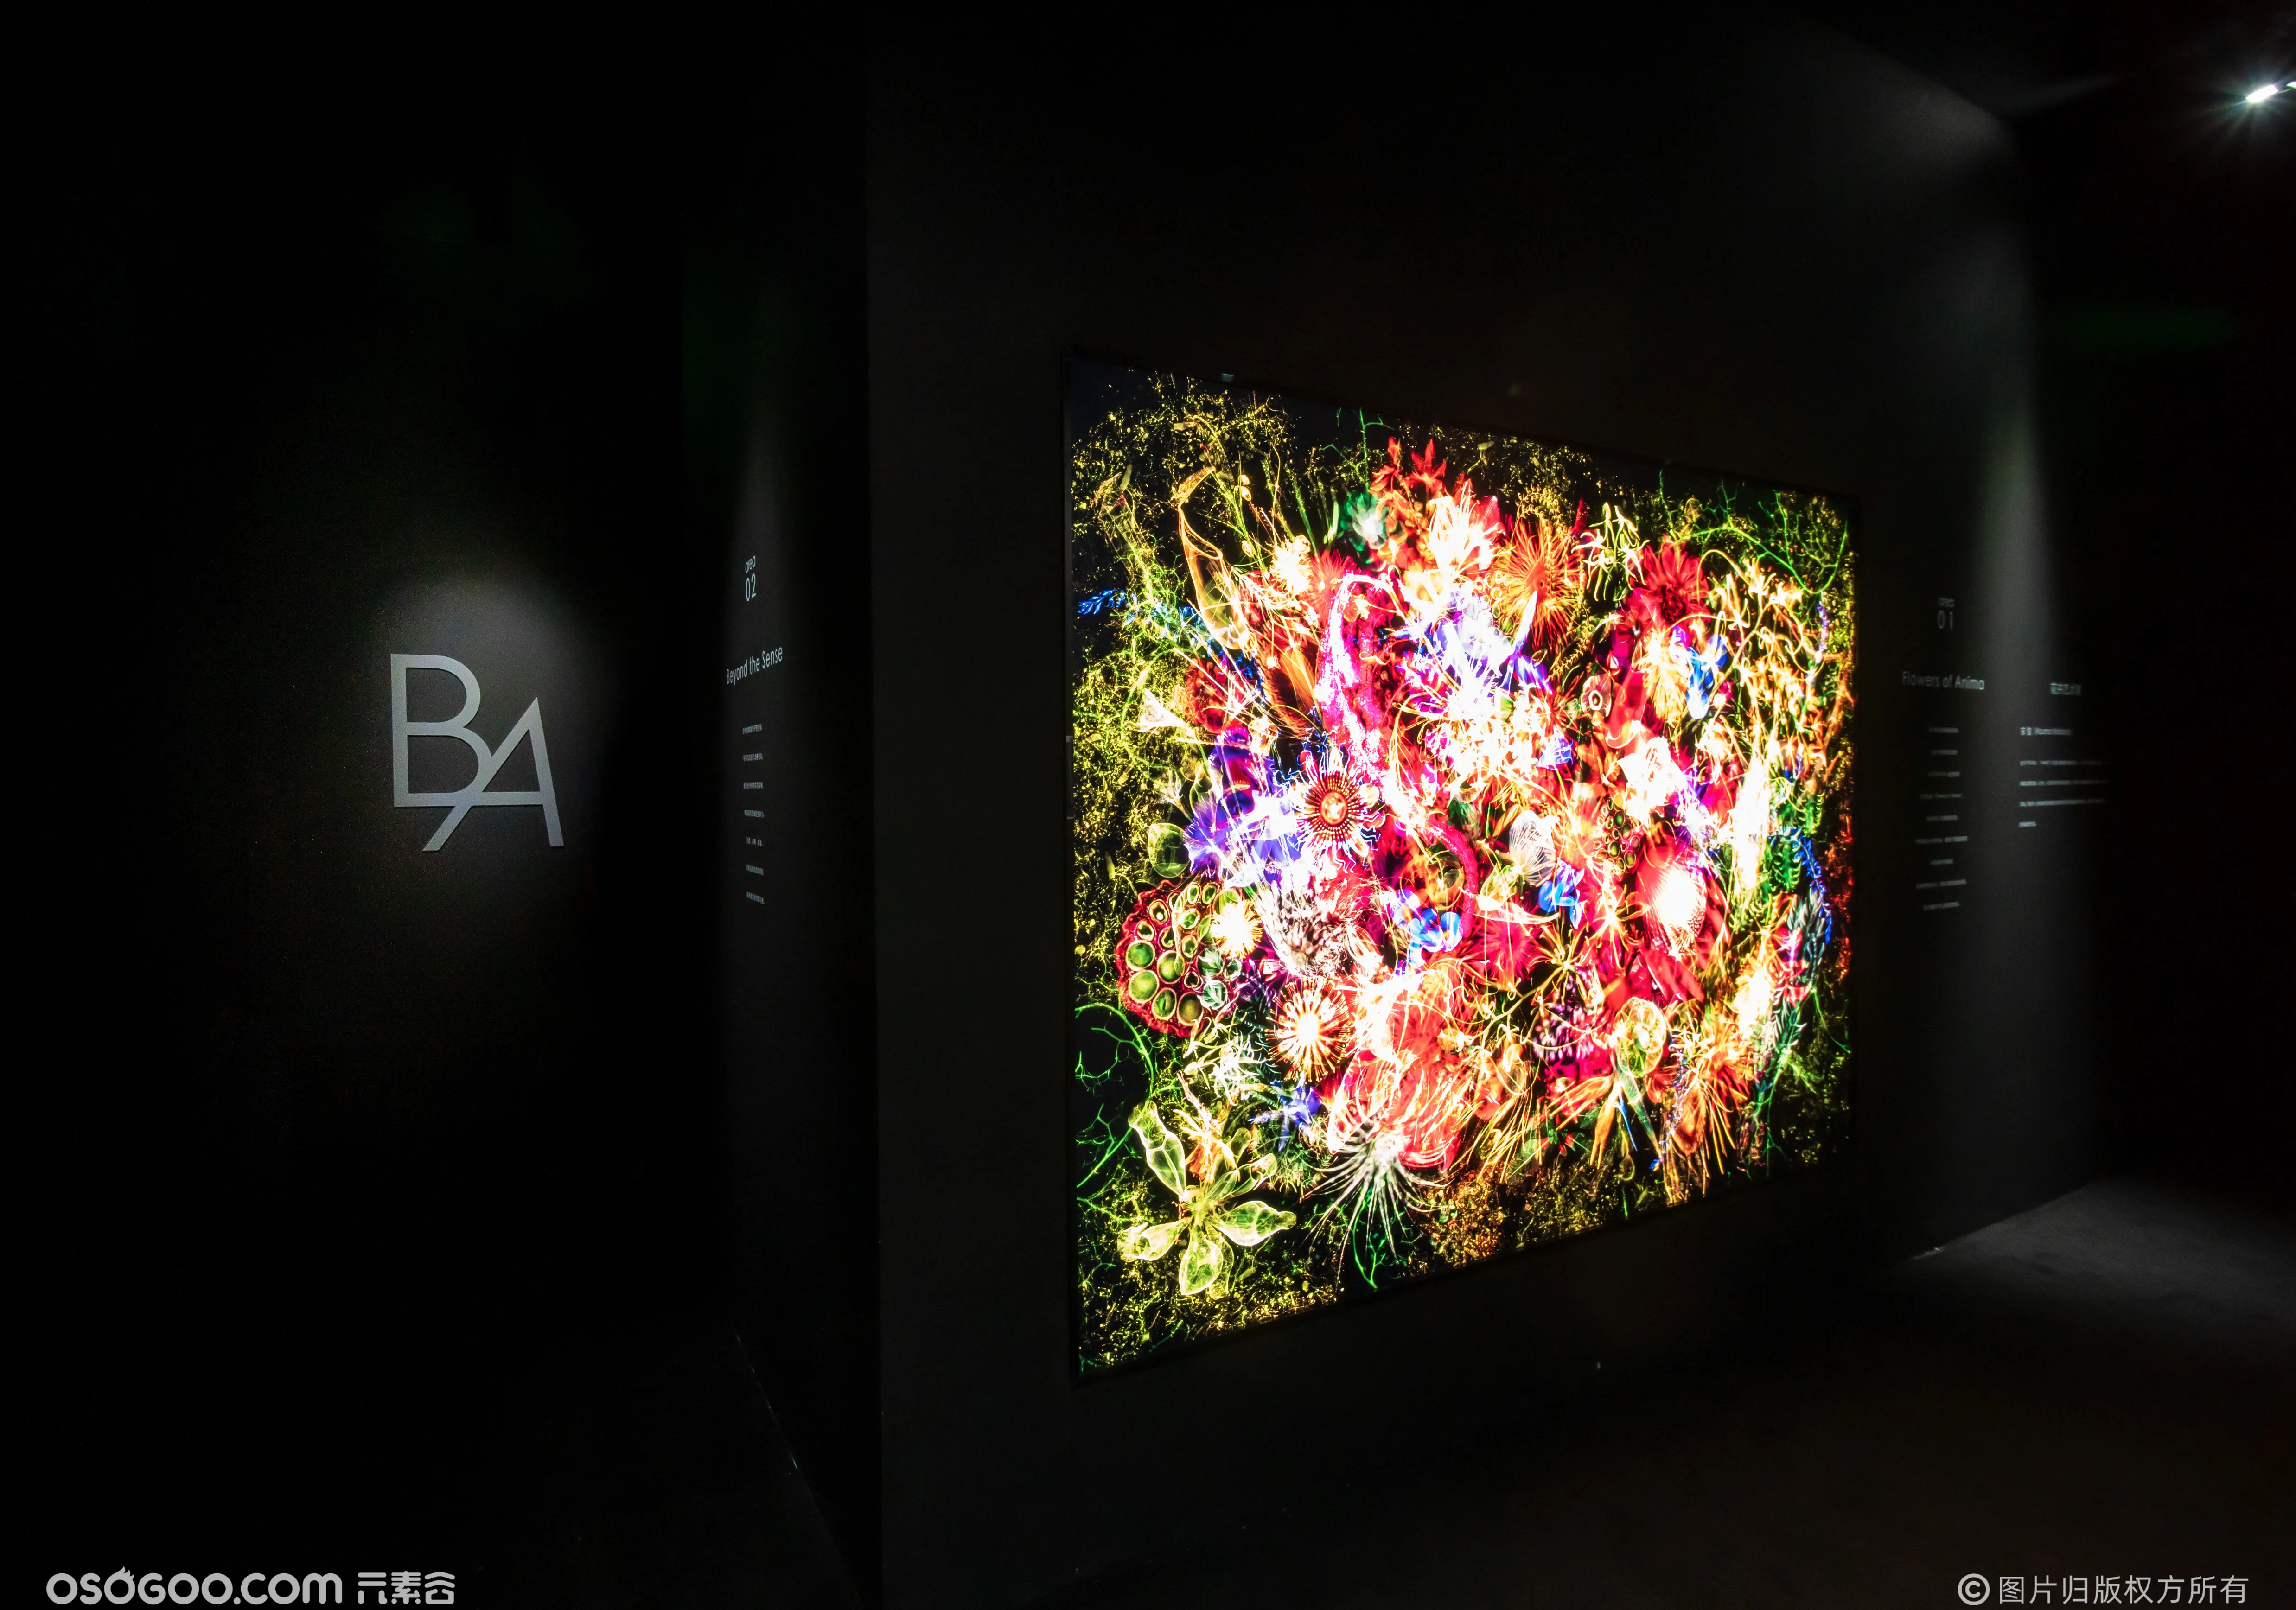 《B.A绽放生命之美》沉浸式艺术展